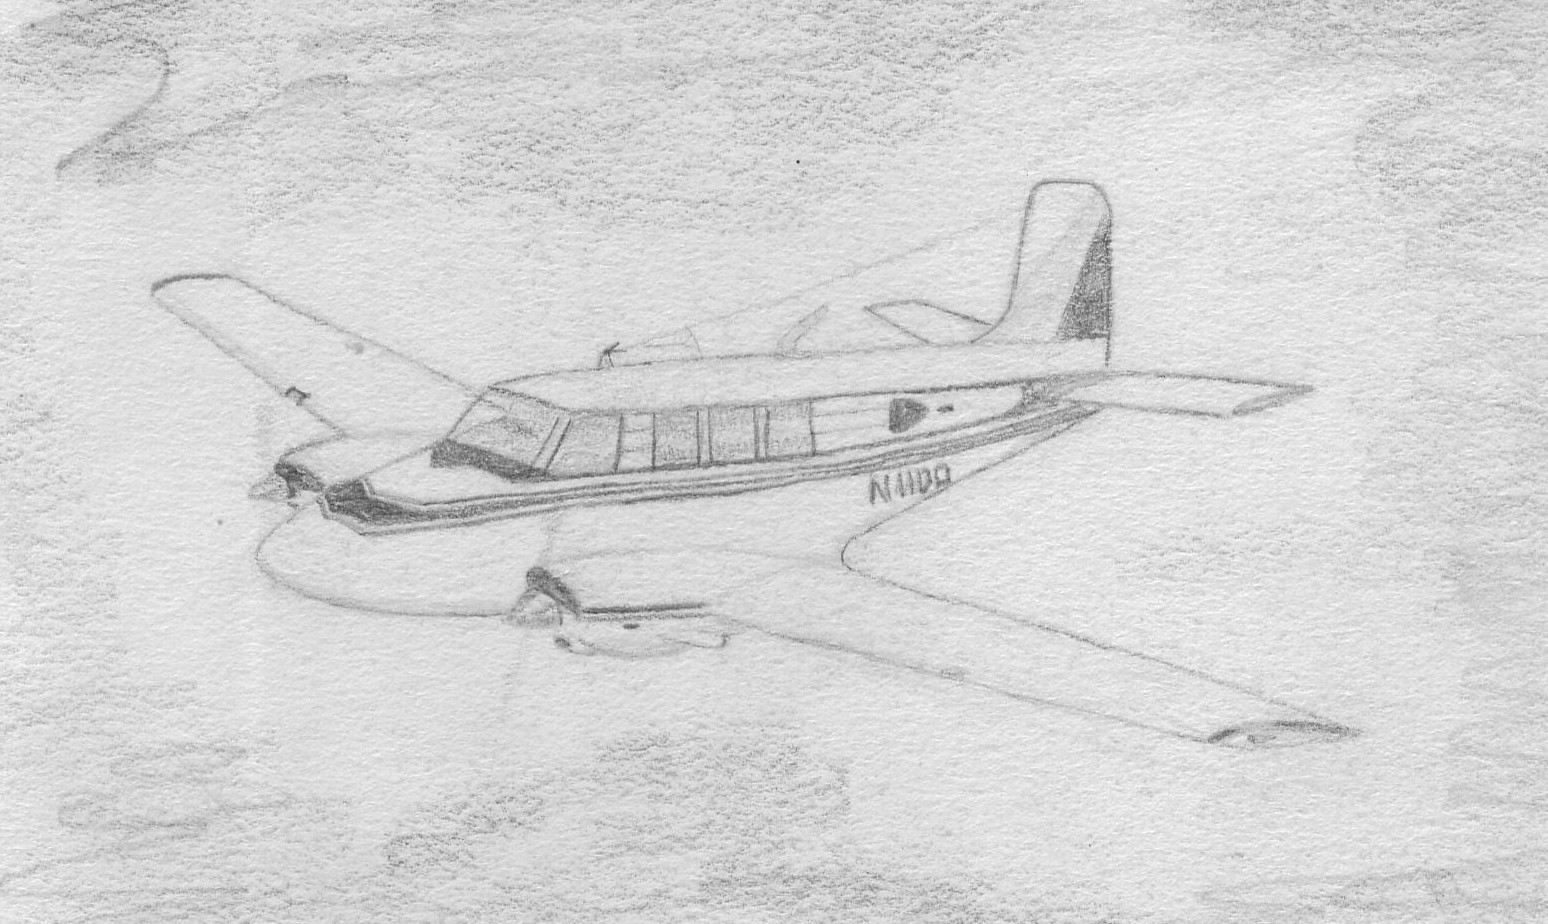 Queen Air Sketch